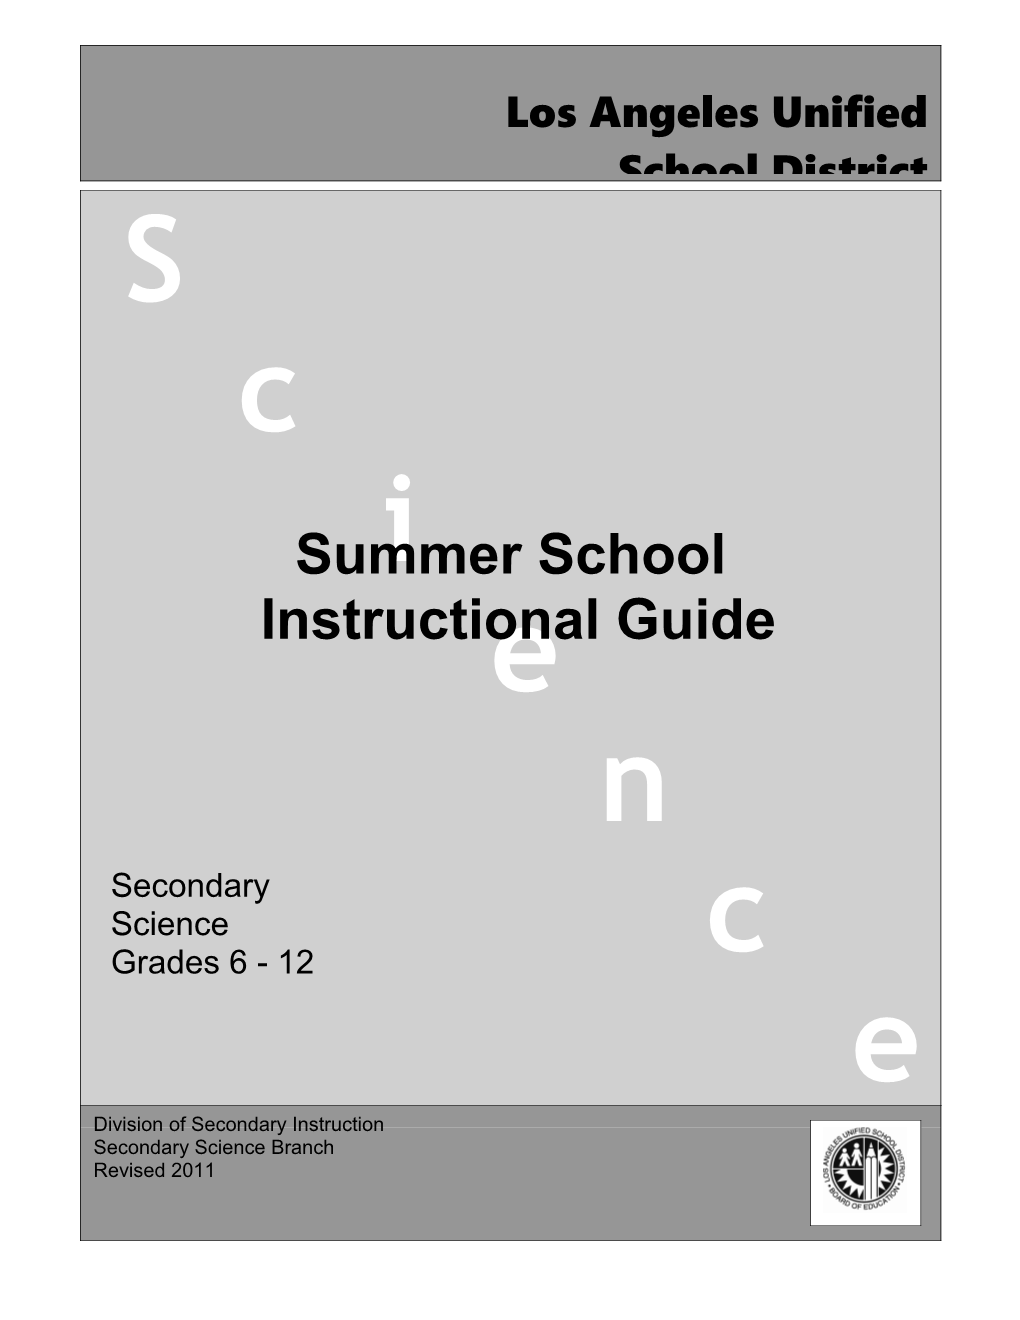 Summer School Curriculum Information